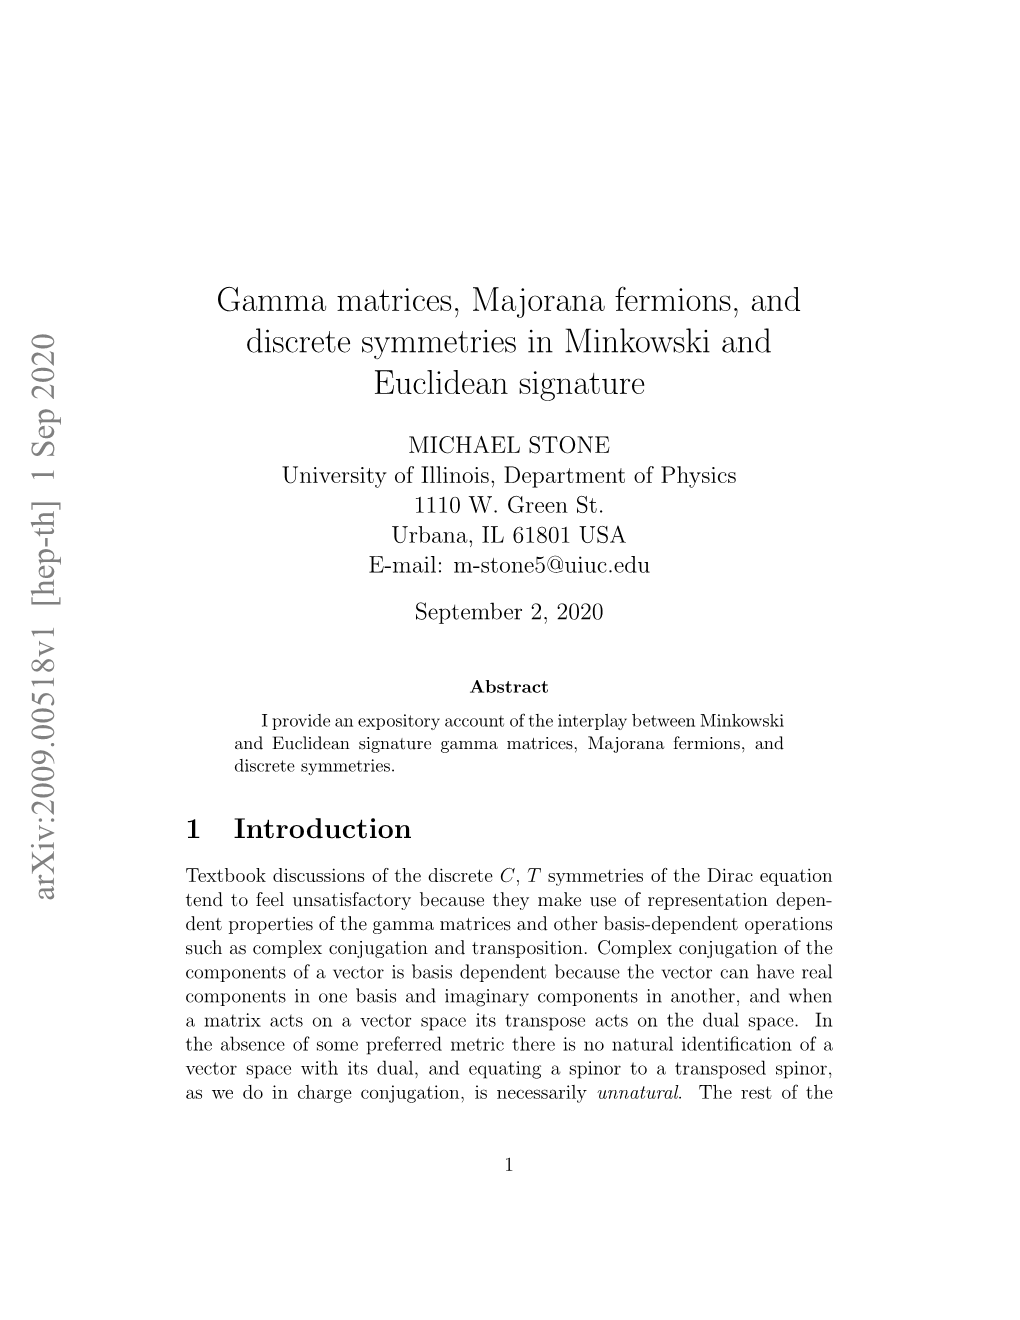 Gamma Matrices, Majorana Fermions, and Discrete Symmetries In